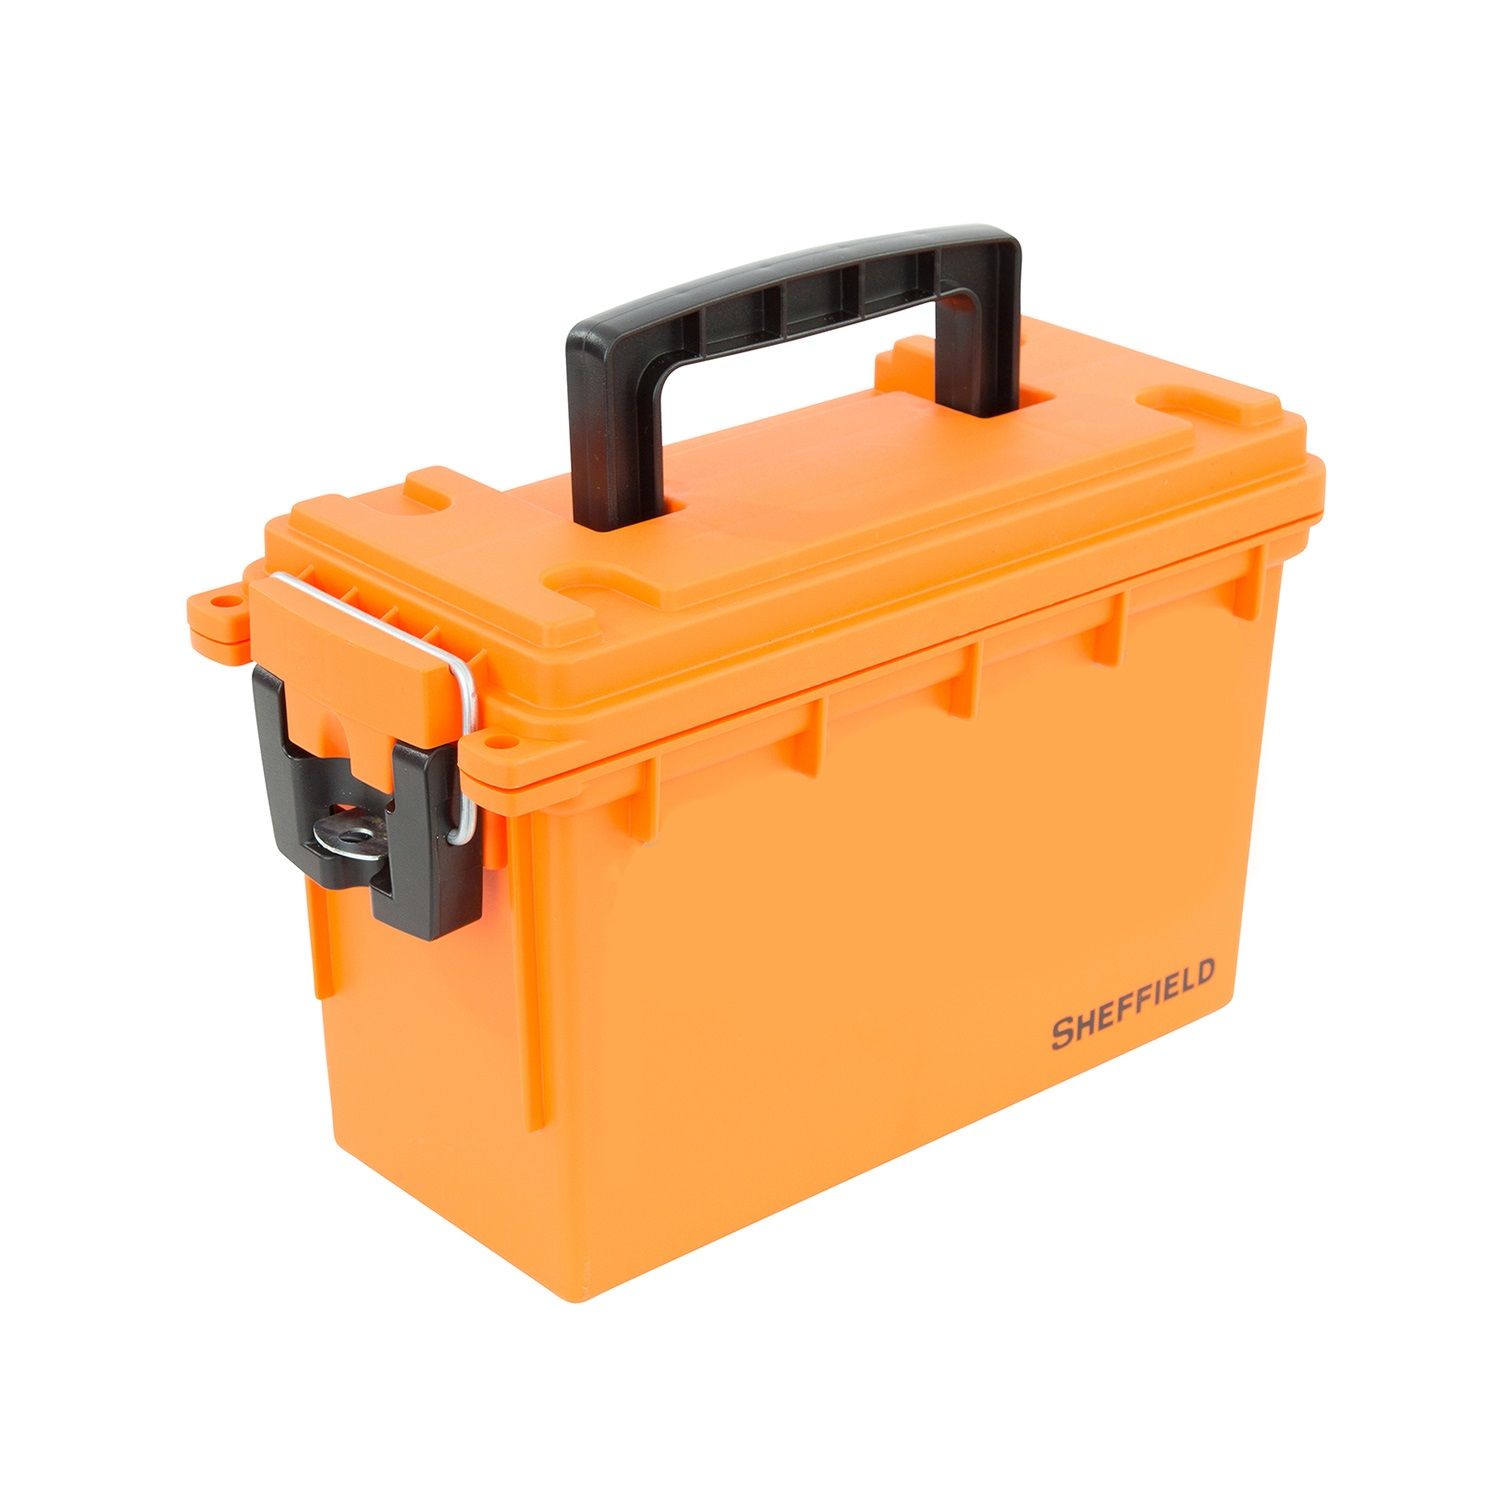 SHEFFIELD 12630 Field Box- Safety Orange (Made In U.S.A.)